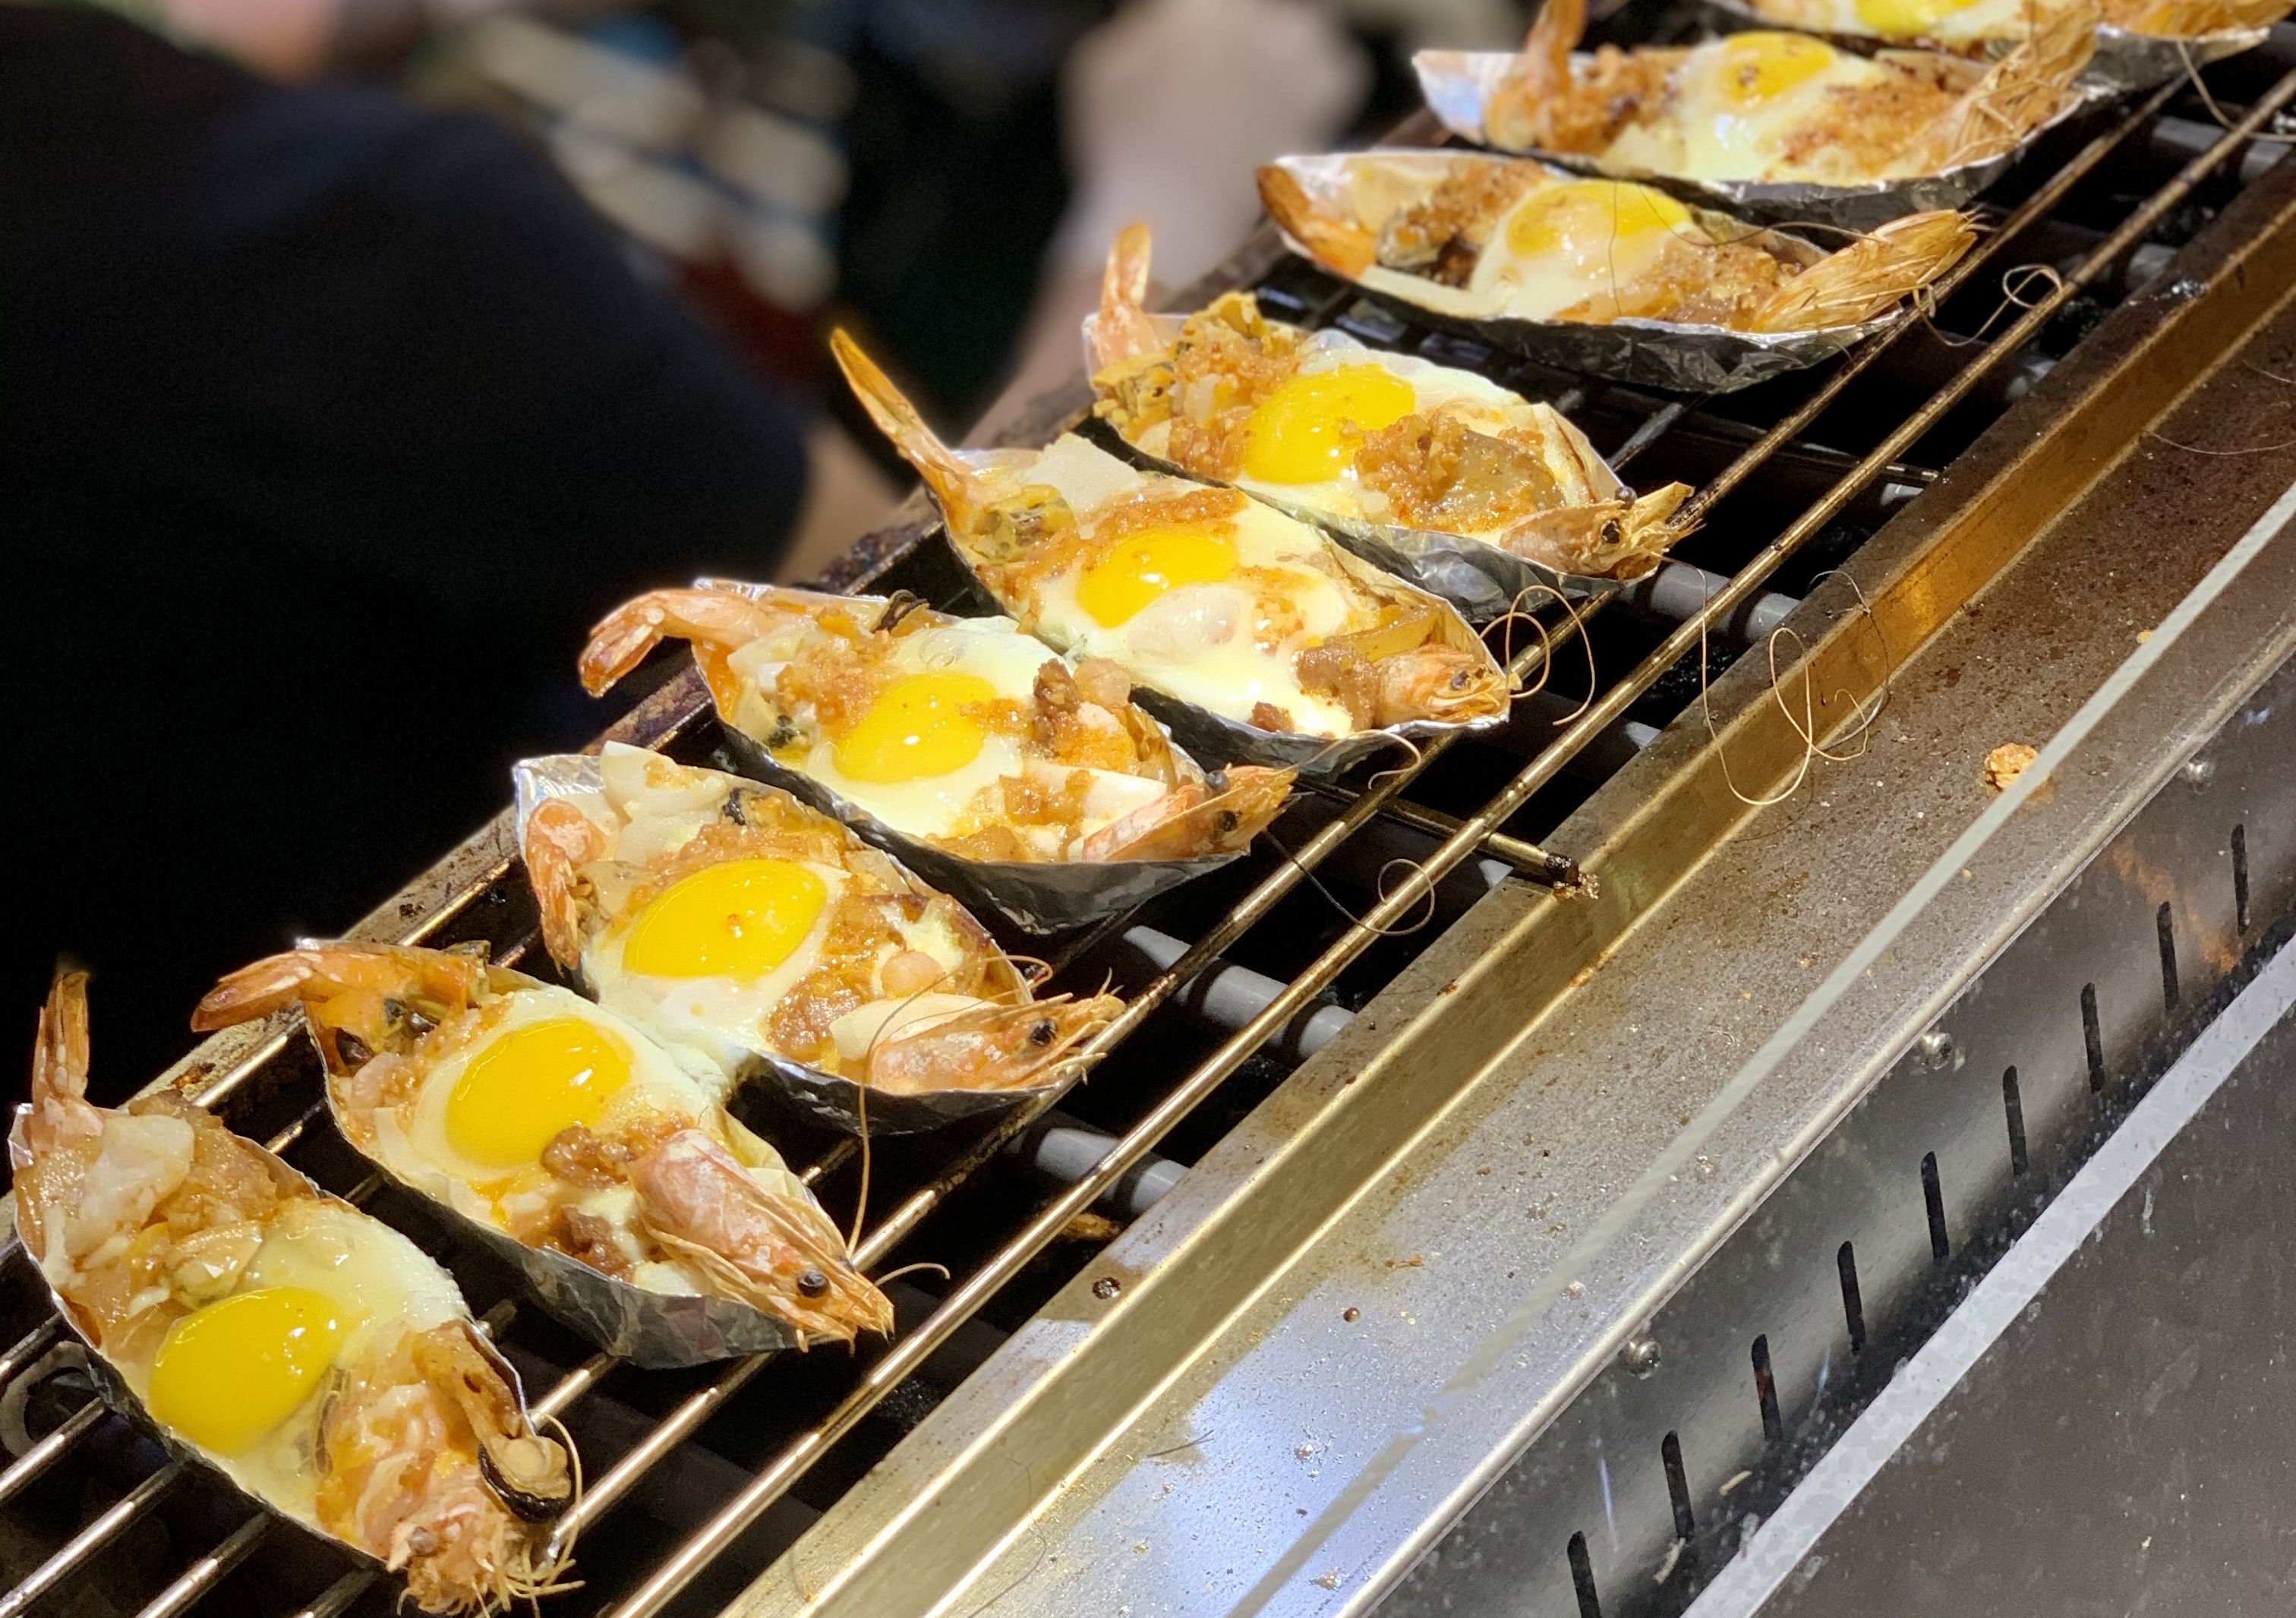 Grilled Shrimp with Egg Macau Food Festival 2019